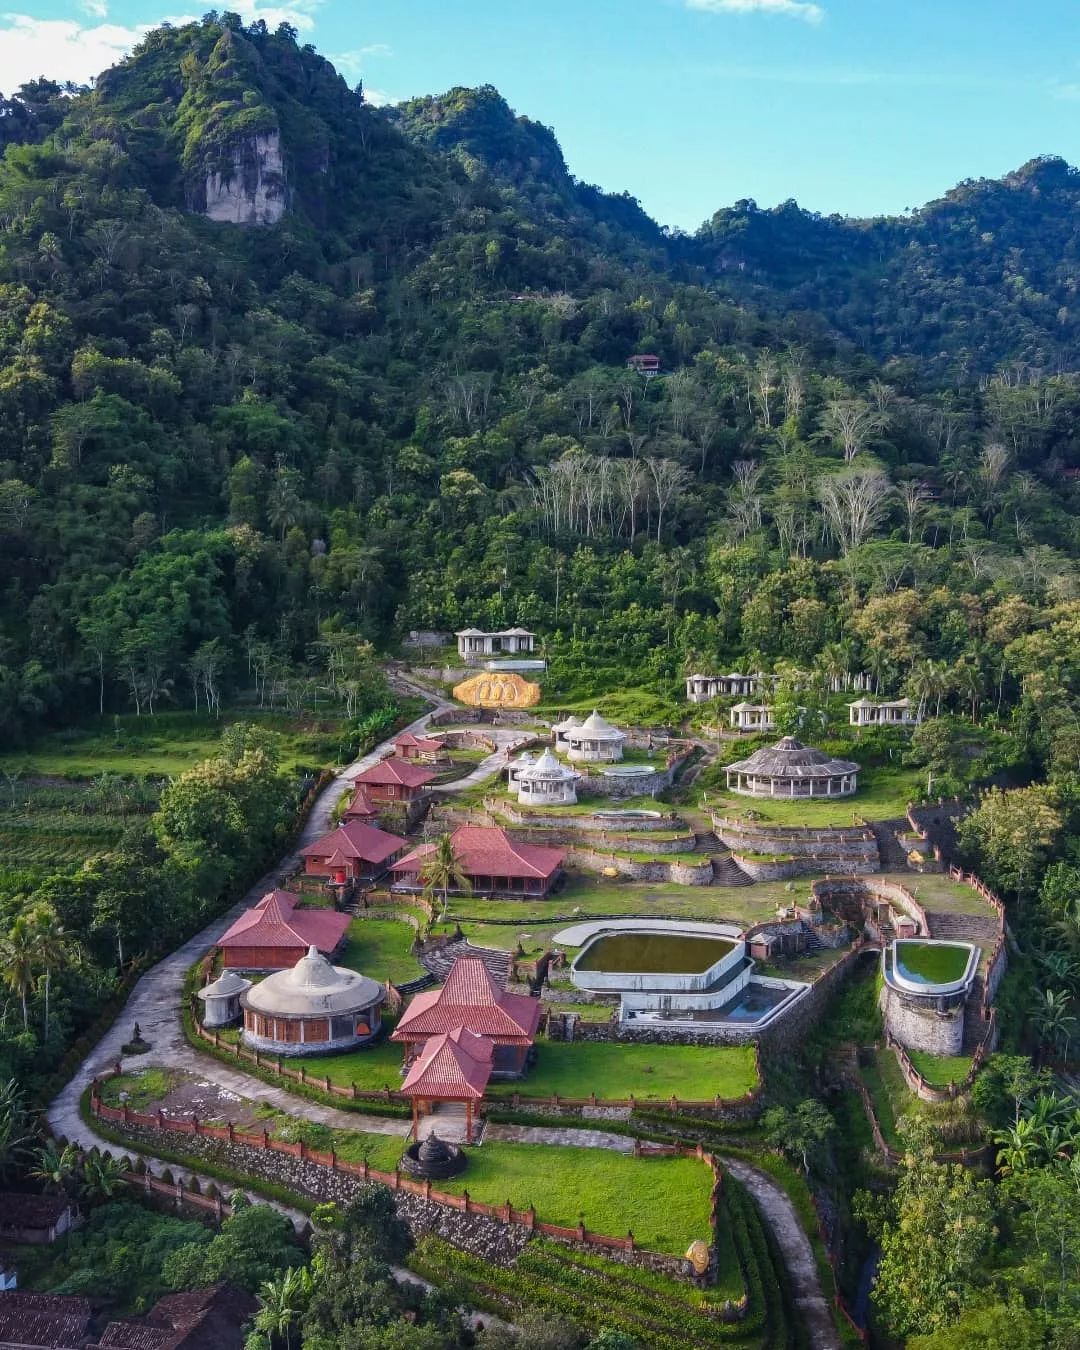 Lokasi Wisata Watu Putih Borobudur Image From @fazizan_anwar